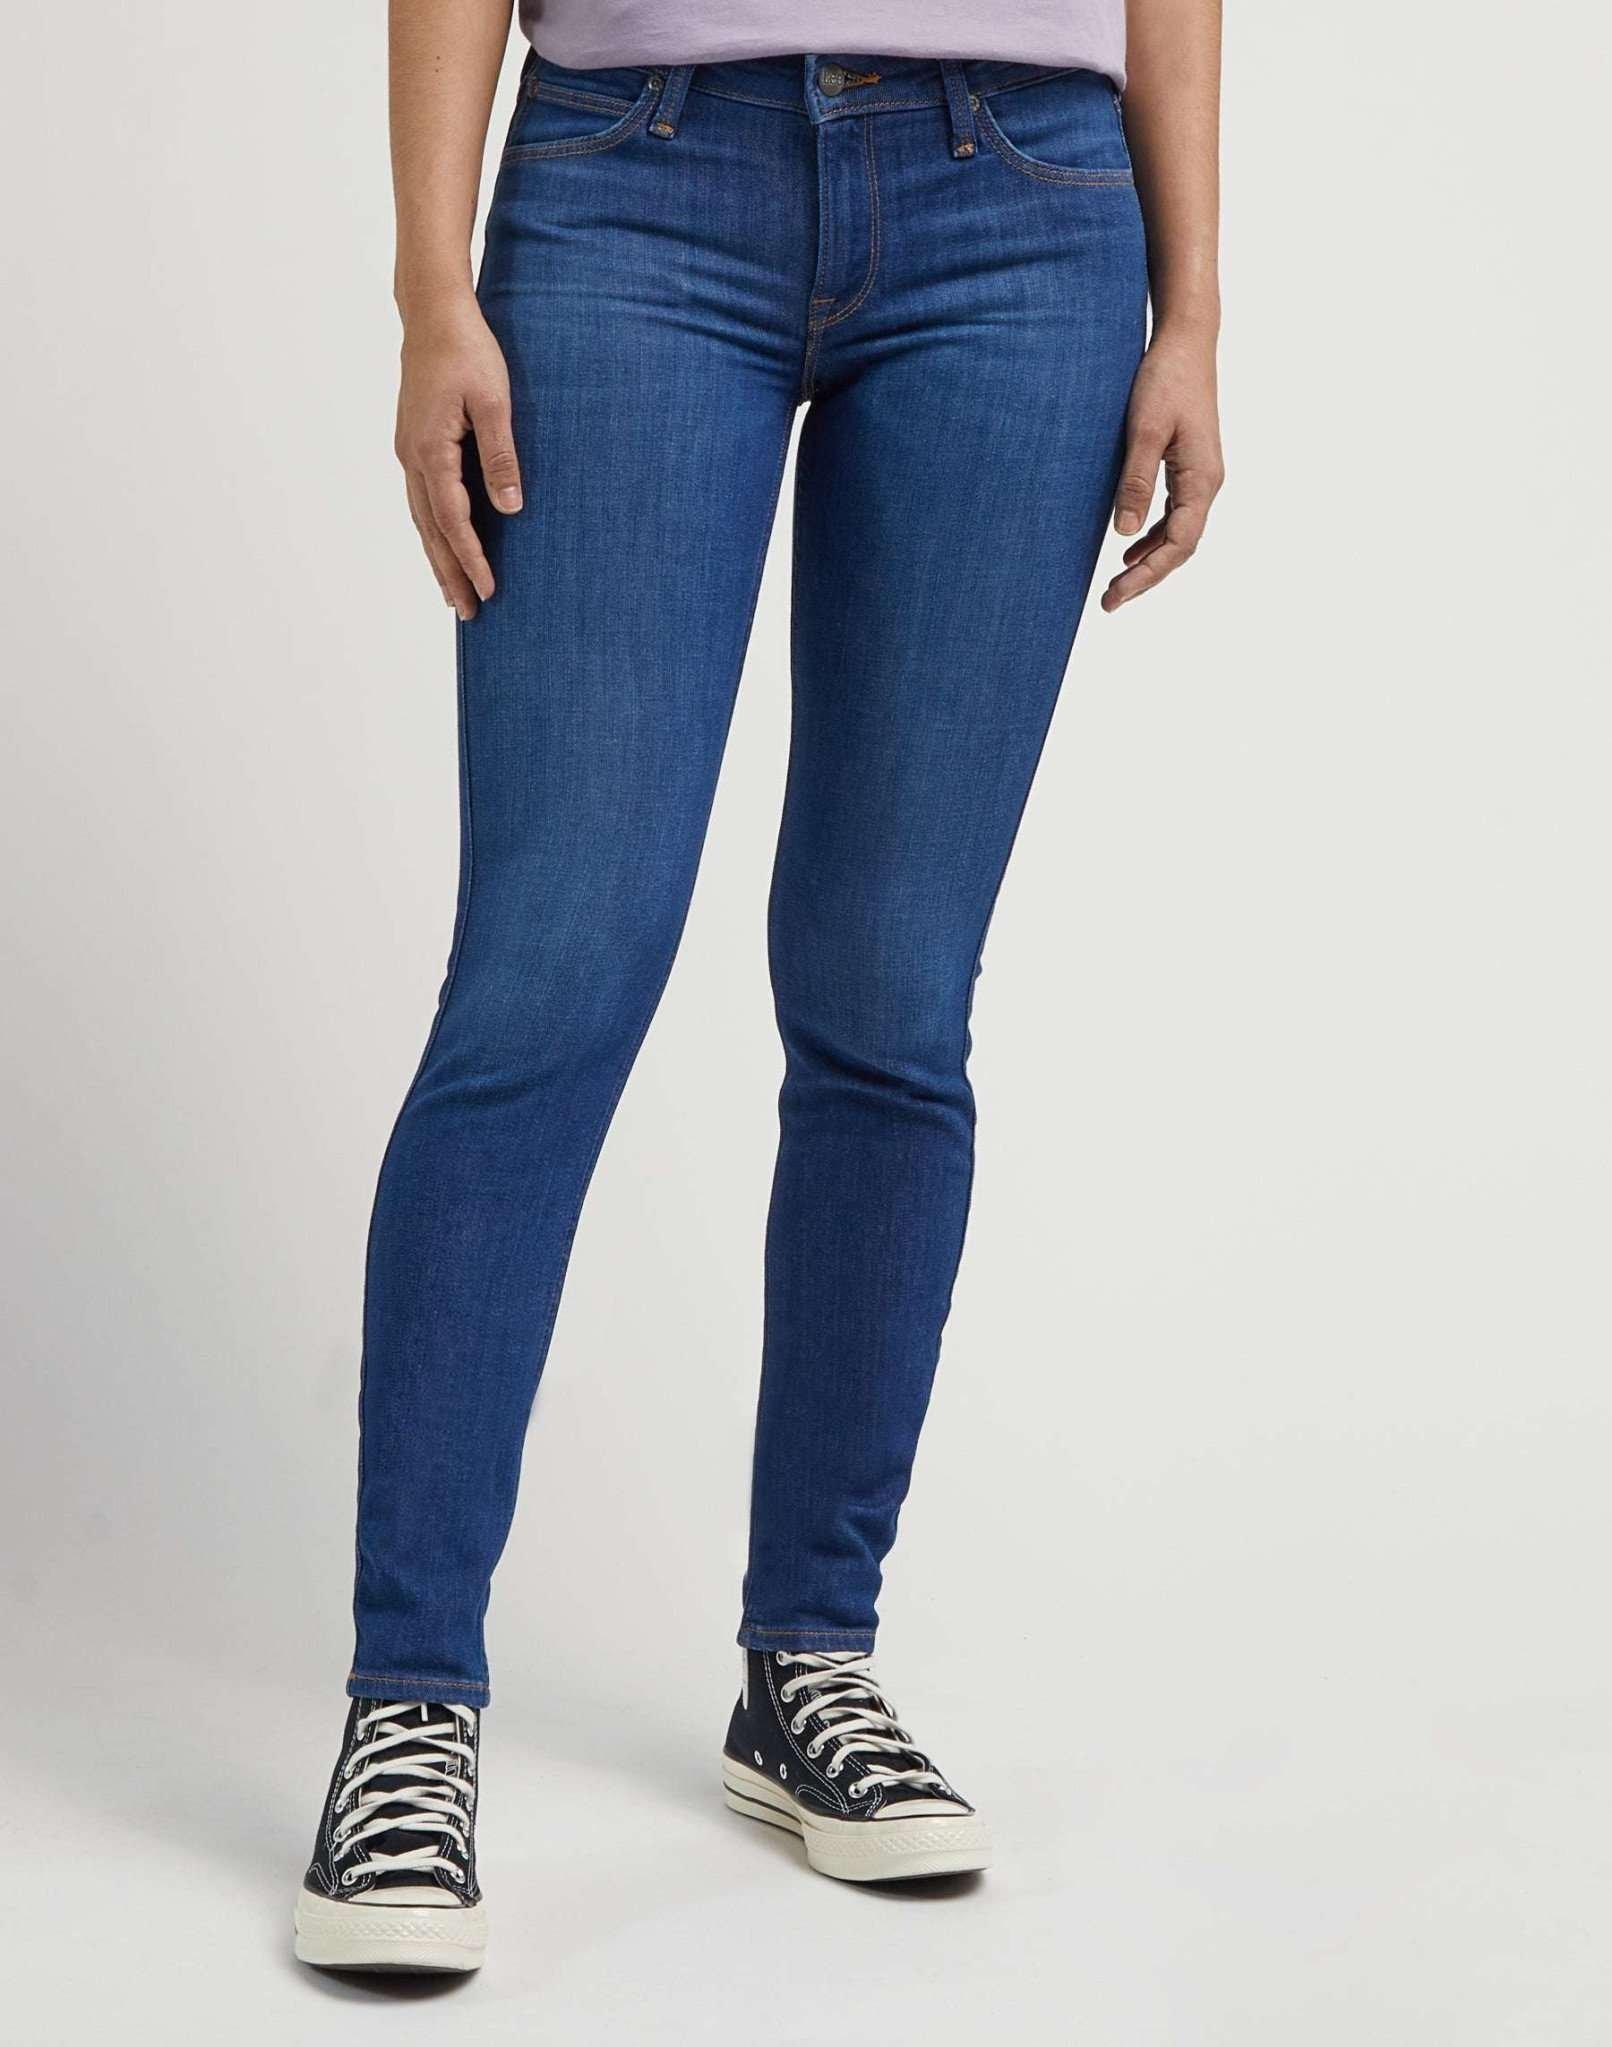 Jeans Skinny Fit Scarlett Damen Blau L33/W27 von Lee